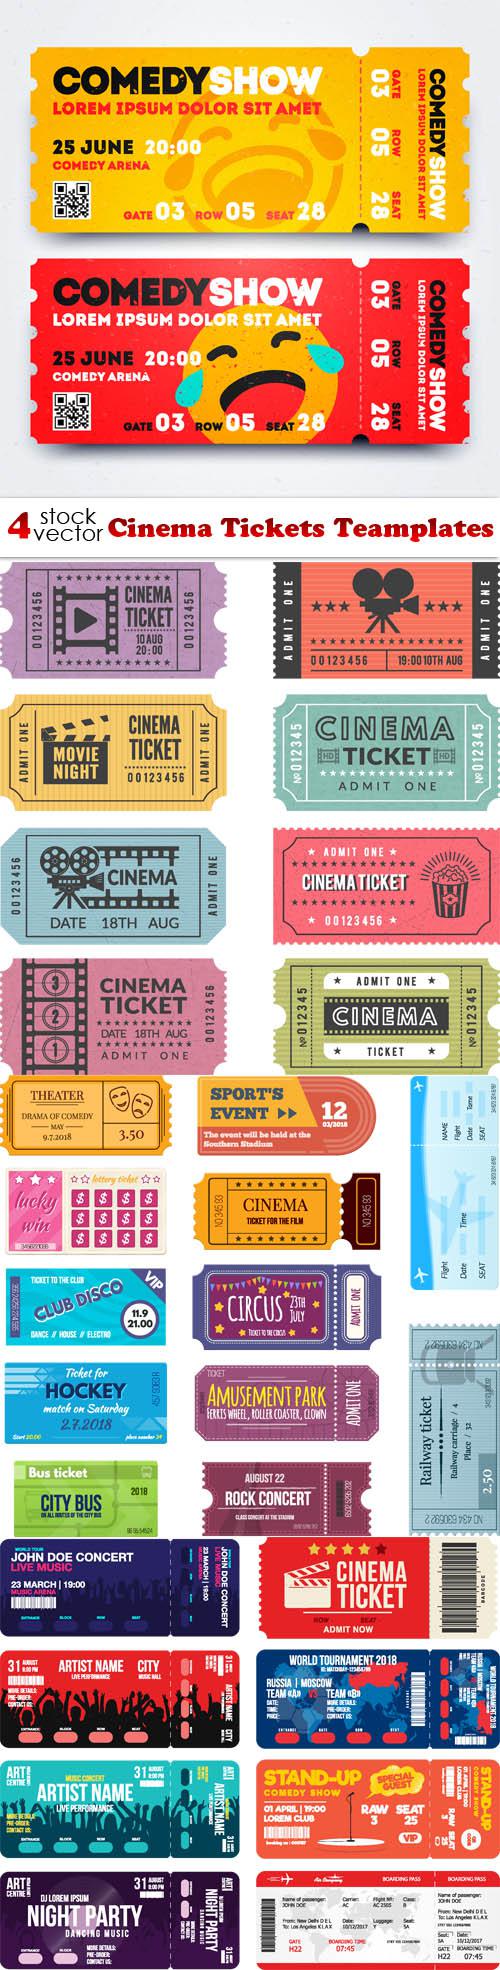 Cinema Tickets Teamplates